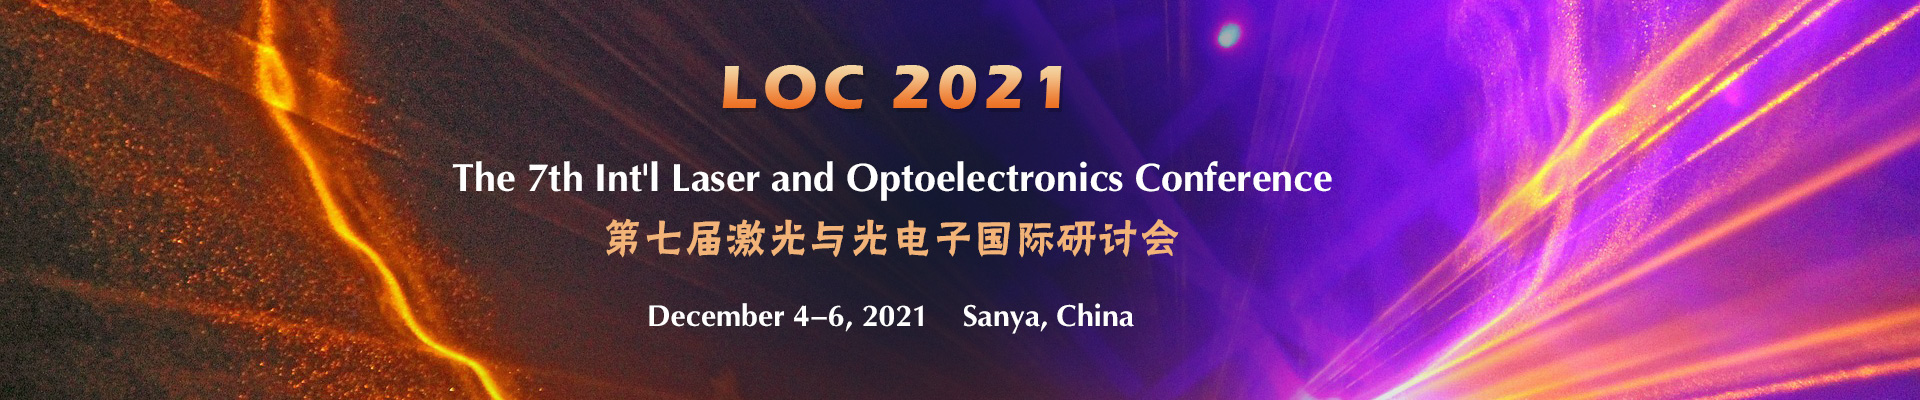 The 7th Laser and Optoelectronics Conference (LOC 2021), Sanya, Hainan, China